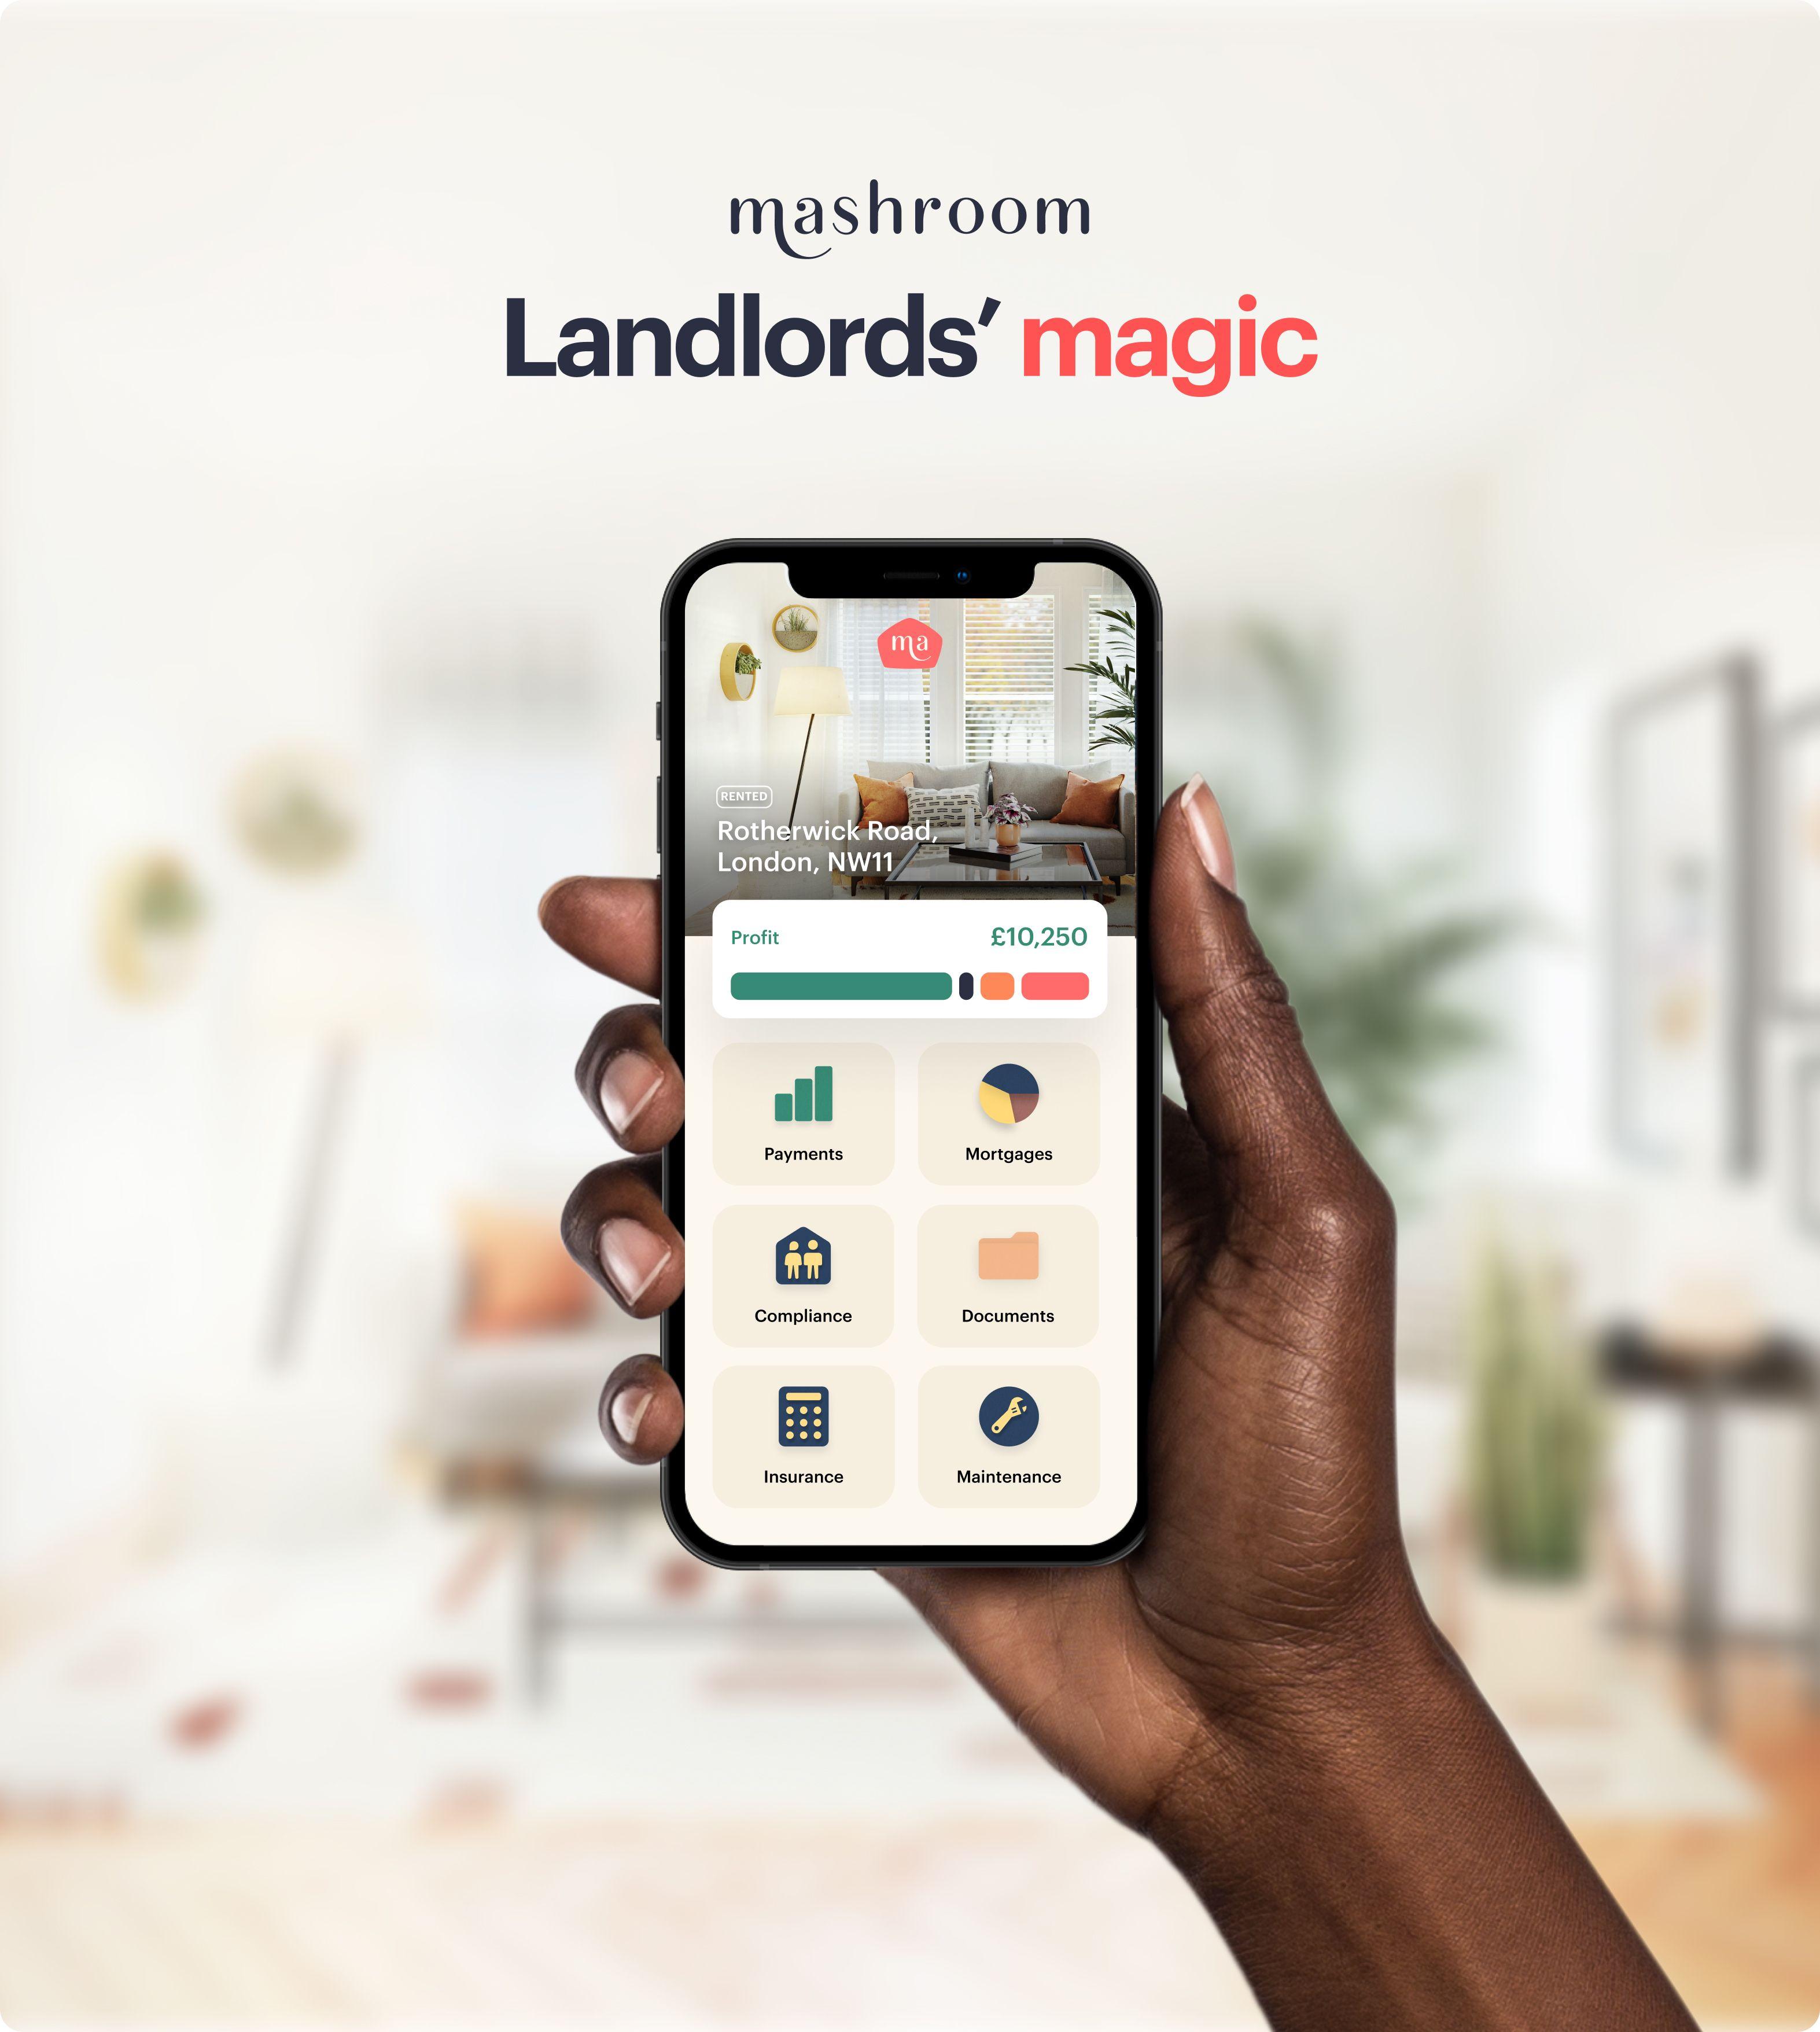 Mashroom messaging Landlords' magic iphone